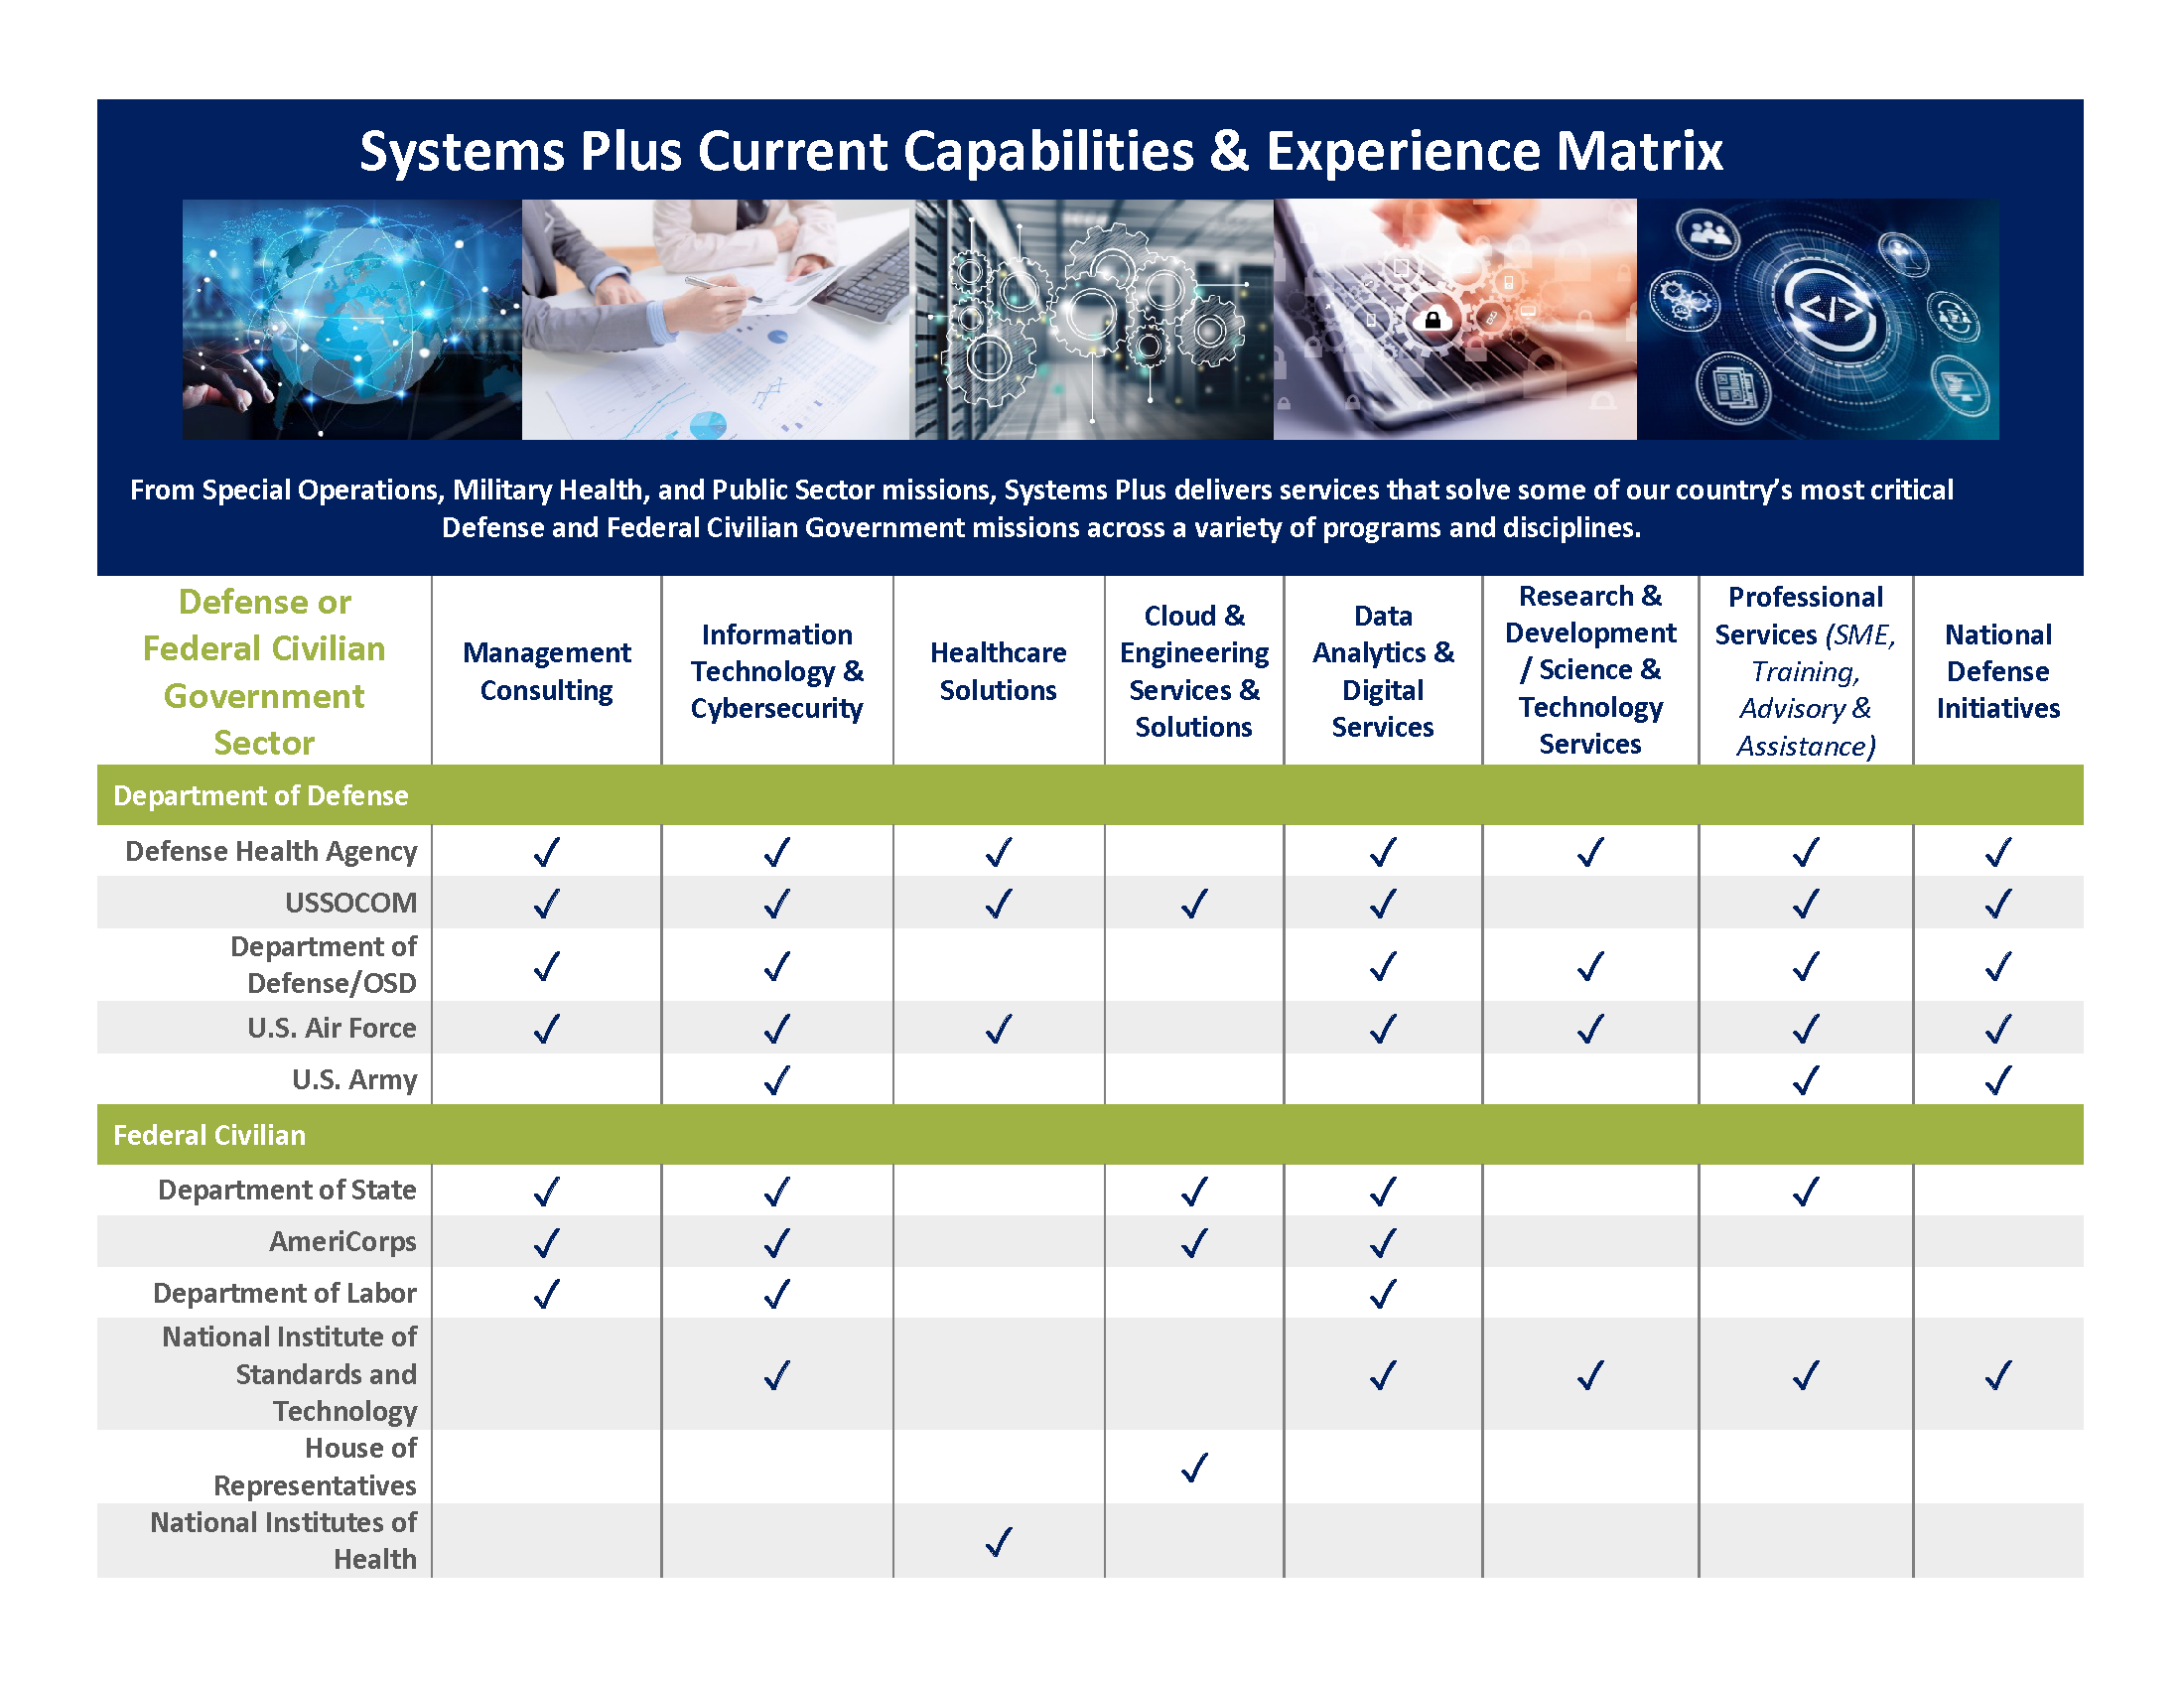 Systems Plus, Inc. Capabilities Matrix